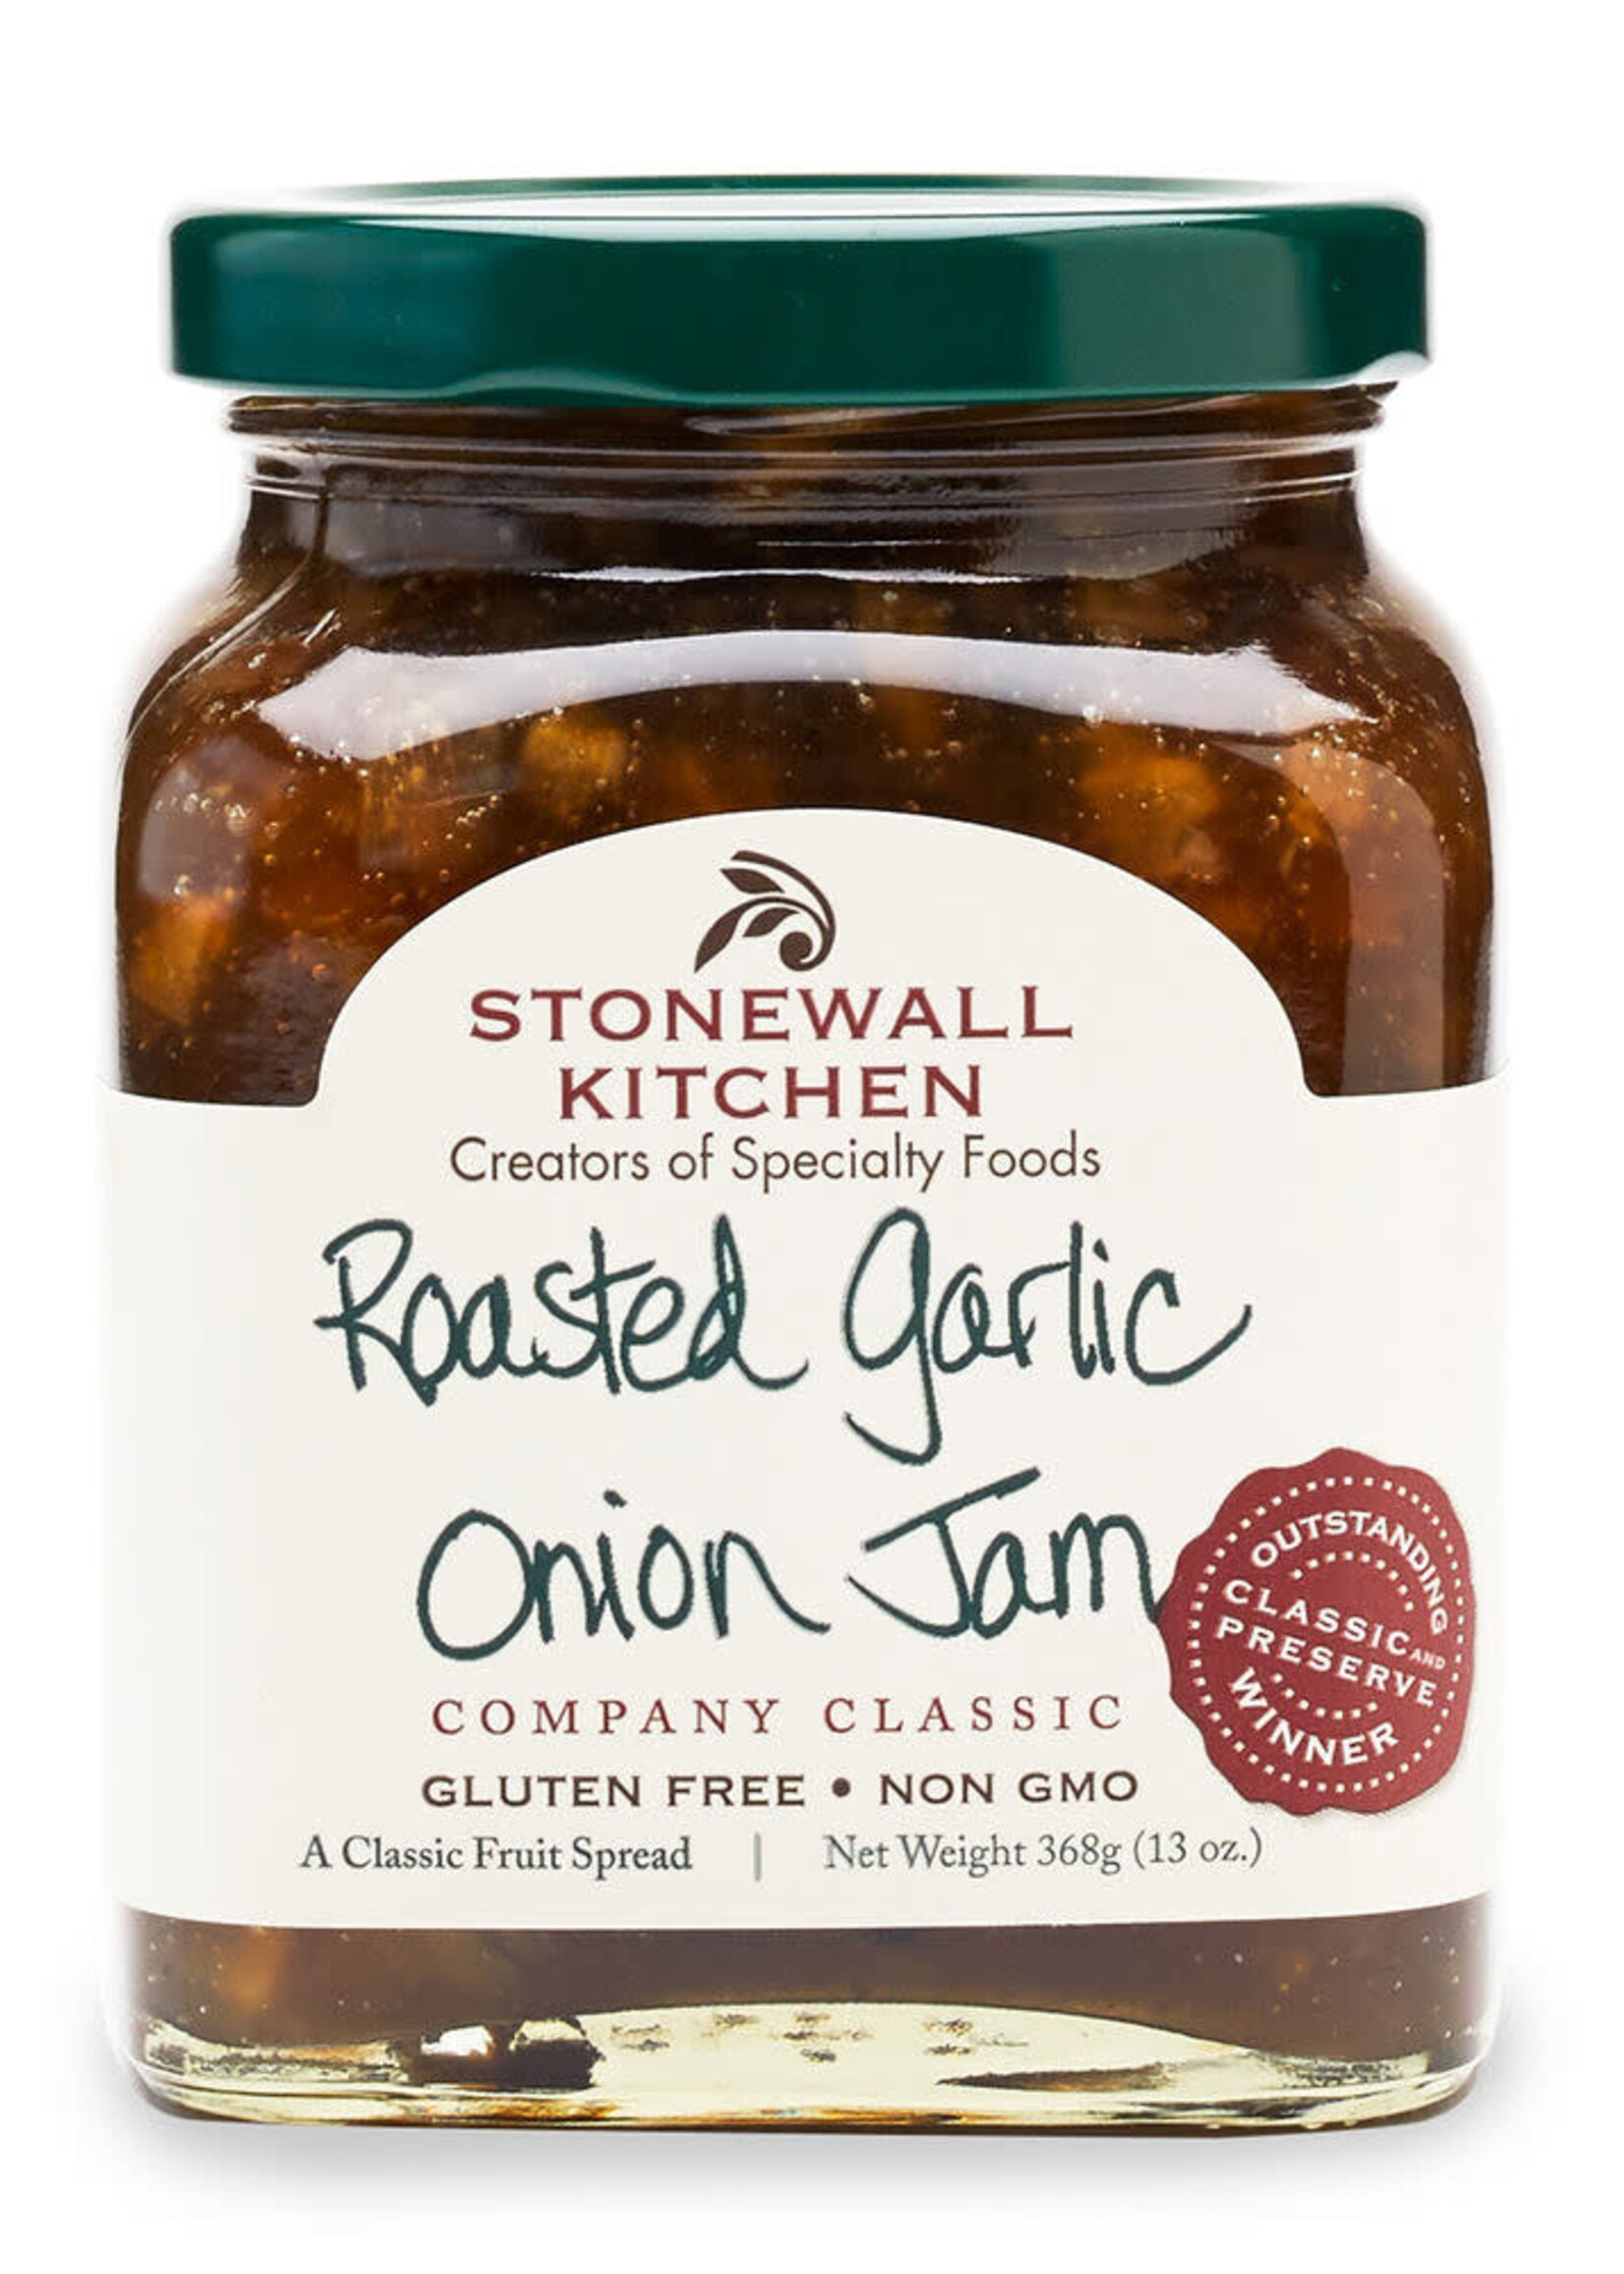 Stonewall Kitchens Roasted Garlic Onion Jam